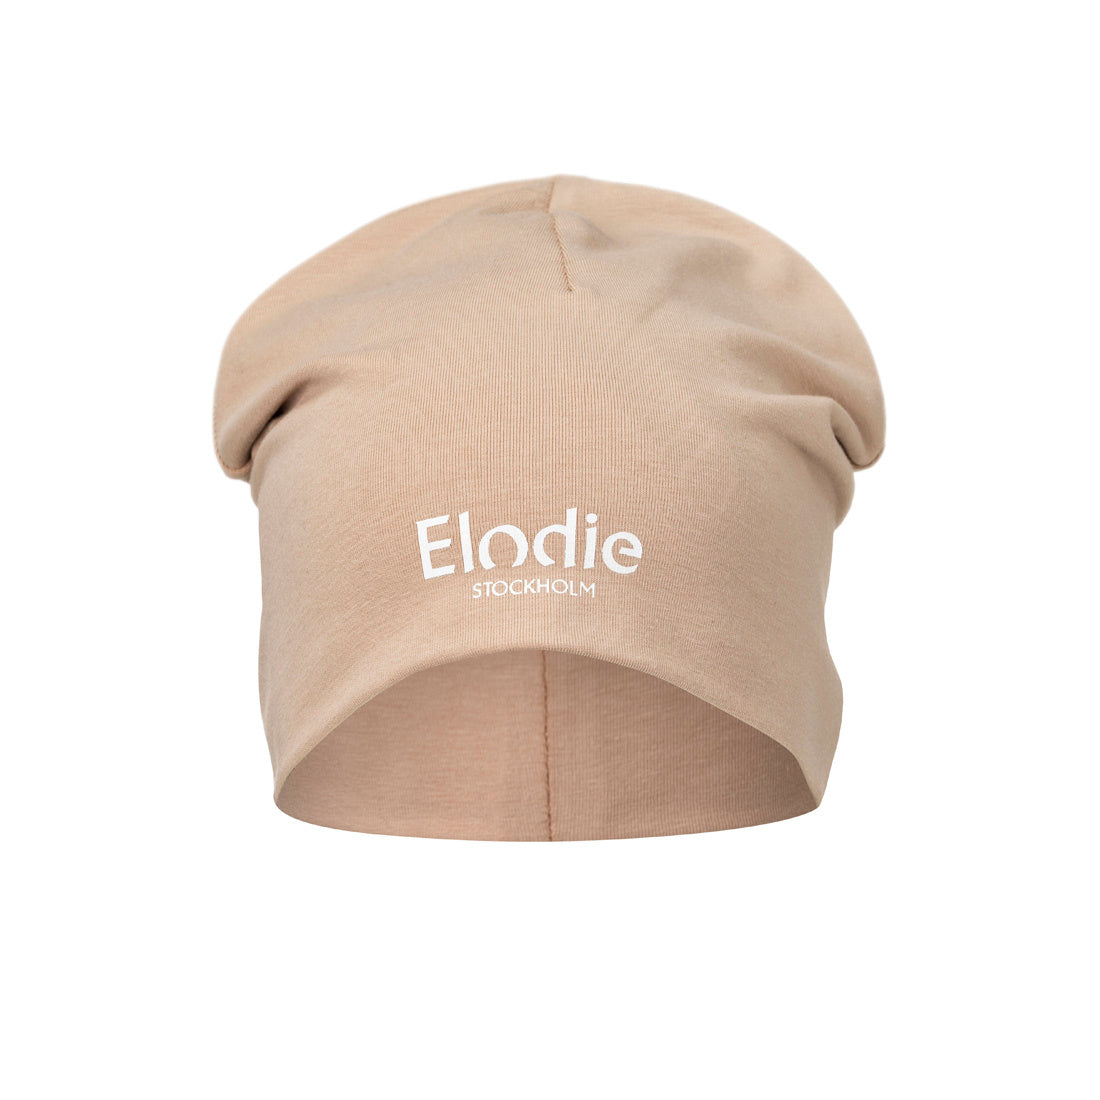 Detalles de Elodie - Cap - Blushing Pink - 1-2 años